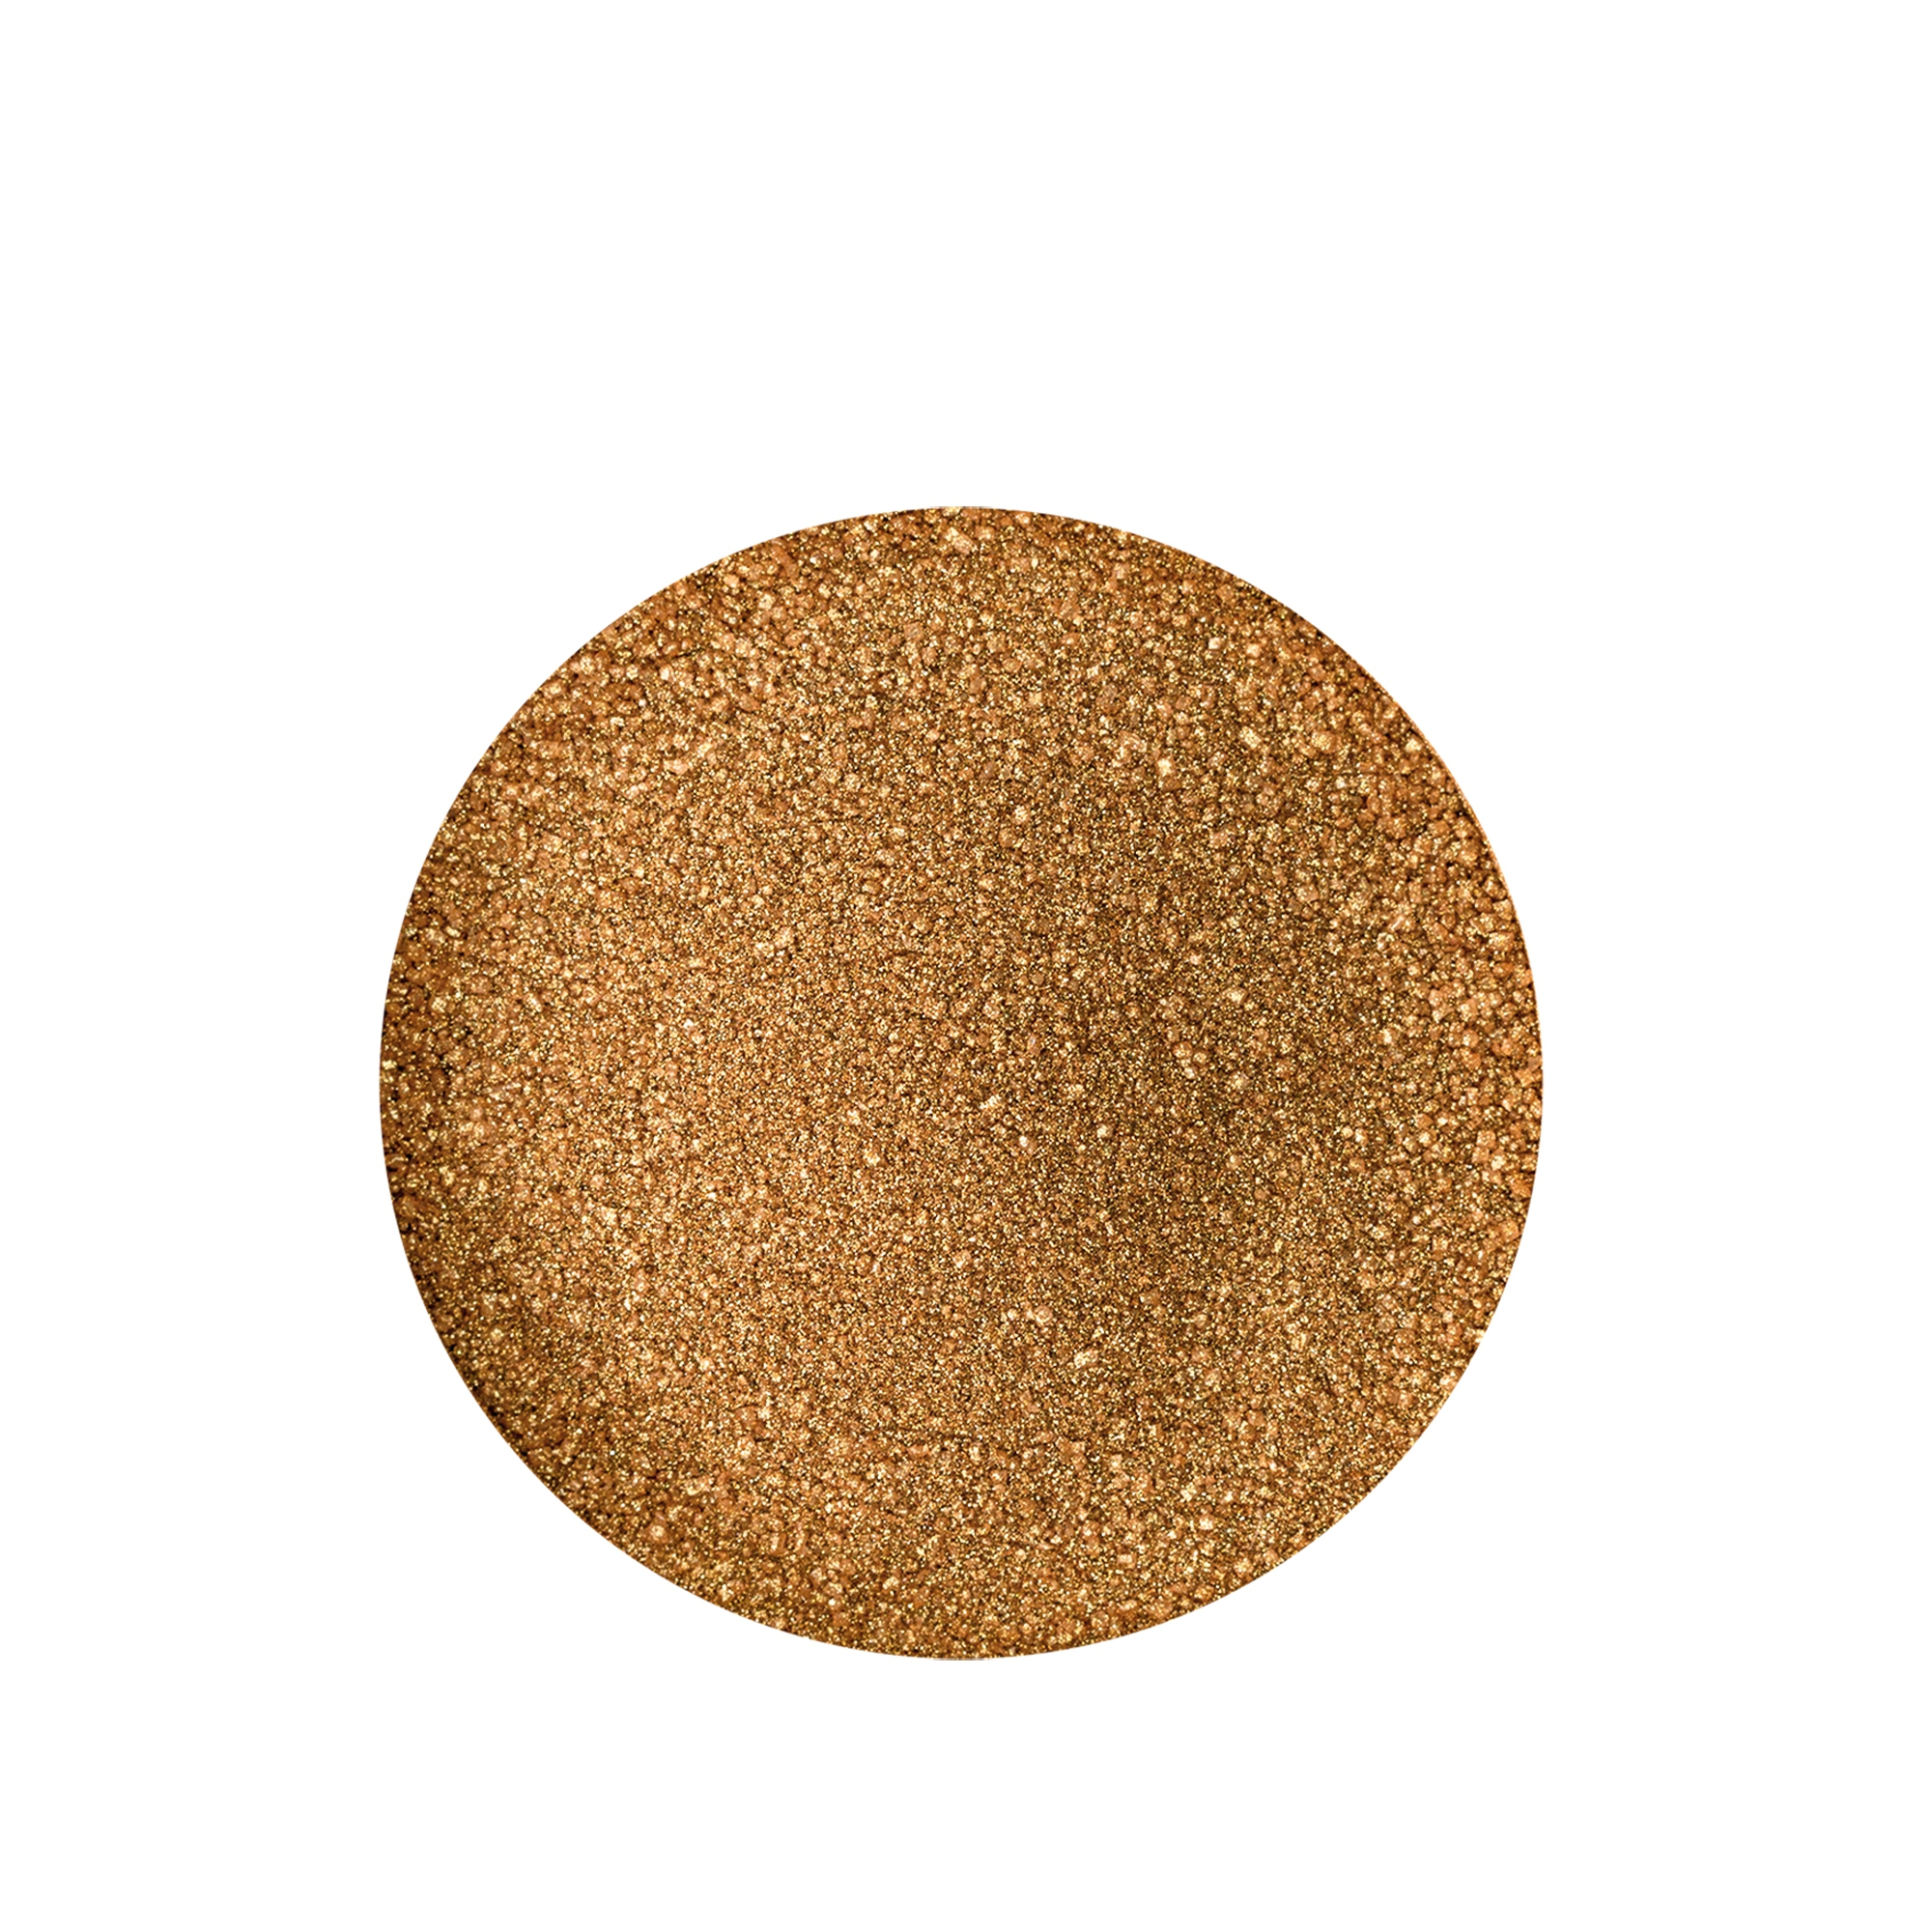 Städter - Edible Sprinkle Decoration Diamond Dust Cinnamon Powder Gold (50g)